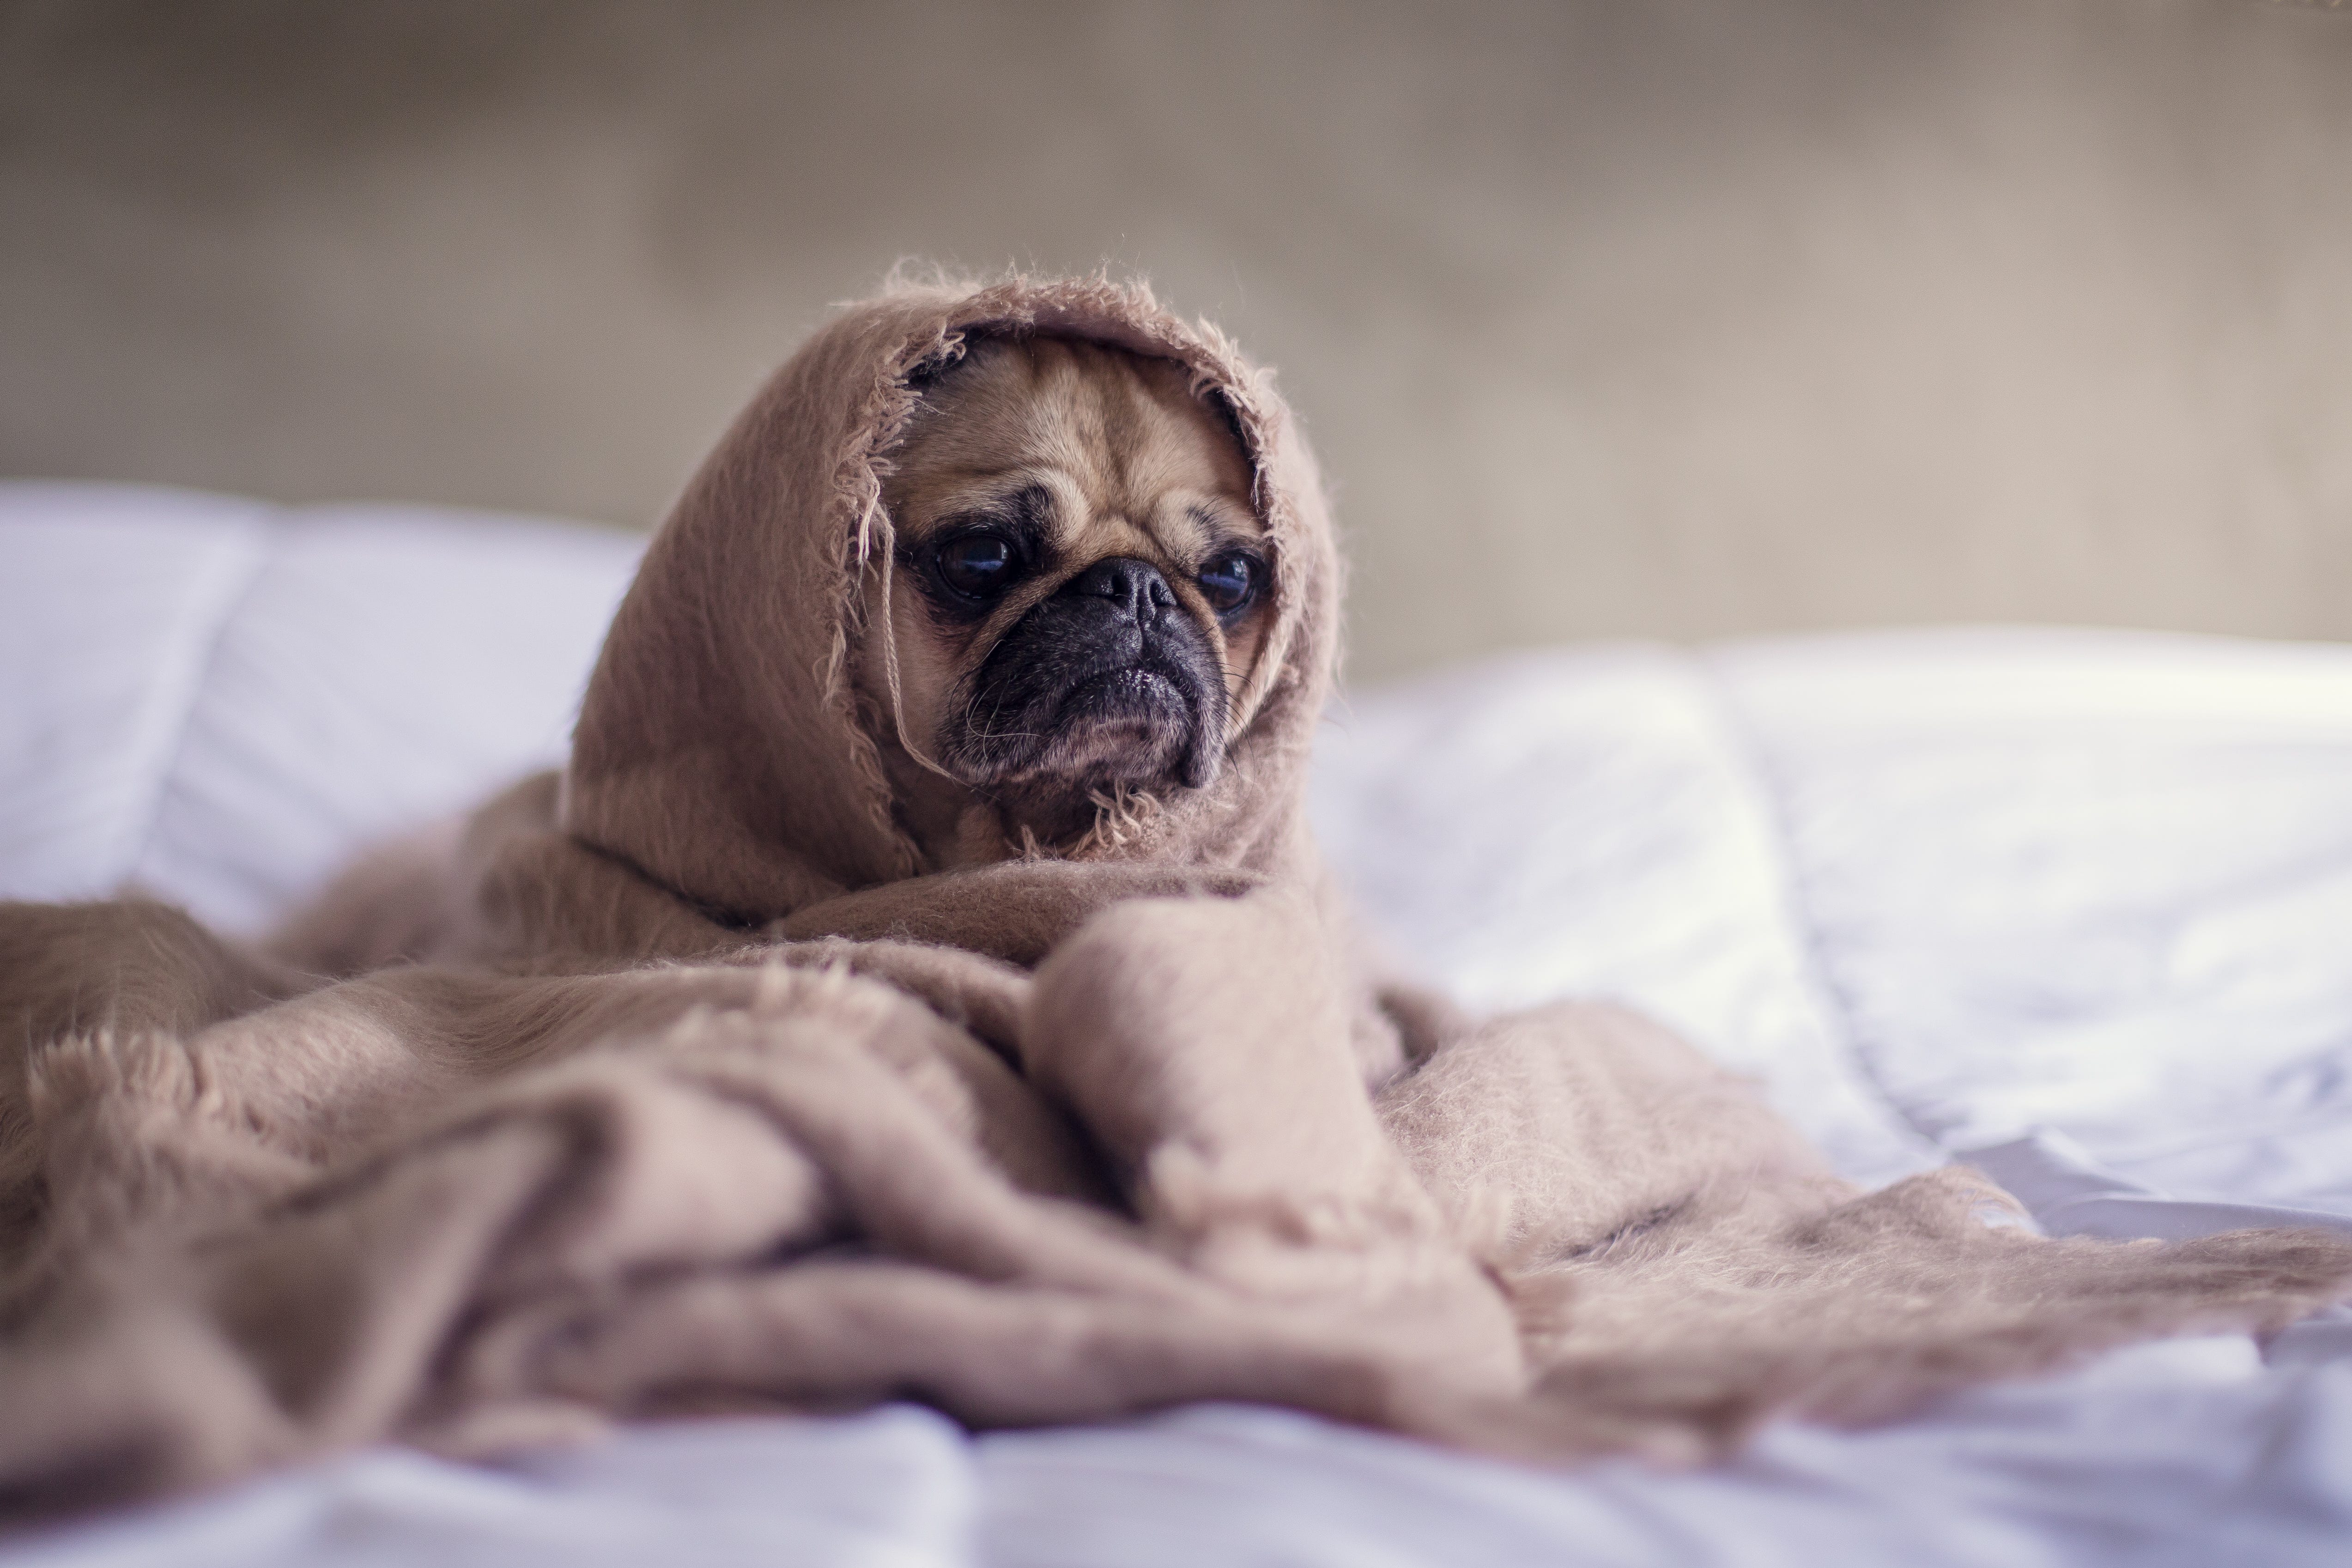 “pug covered with blanket on bedspread” by [Matthew Henry](https://unsplash.com/@matthewhenry?utm_source=medium&utm_medium=referral) on [Unsplash](https://unsplash.com?utm_source=medium&utm_medium=referral)